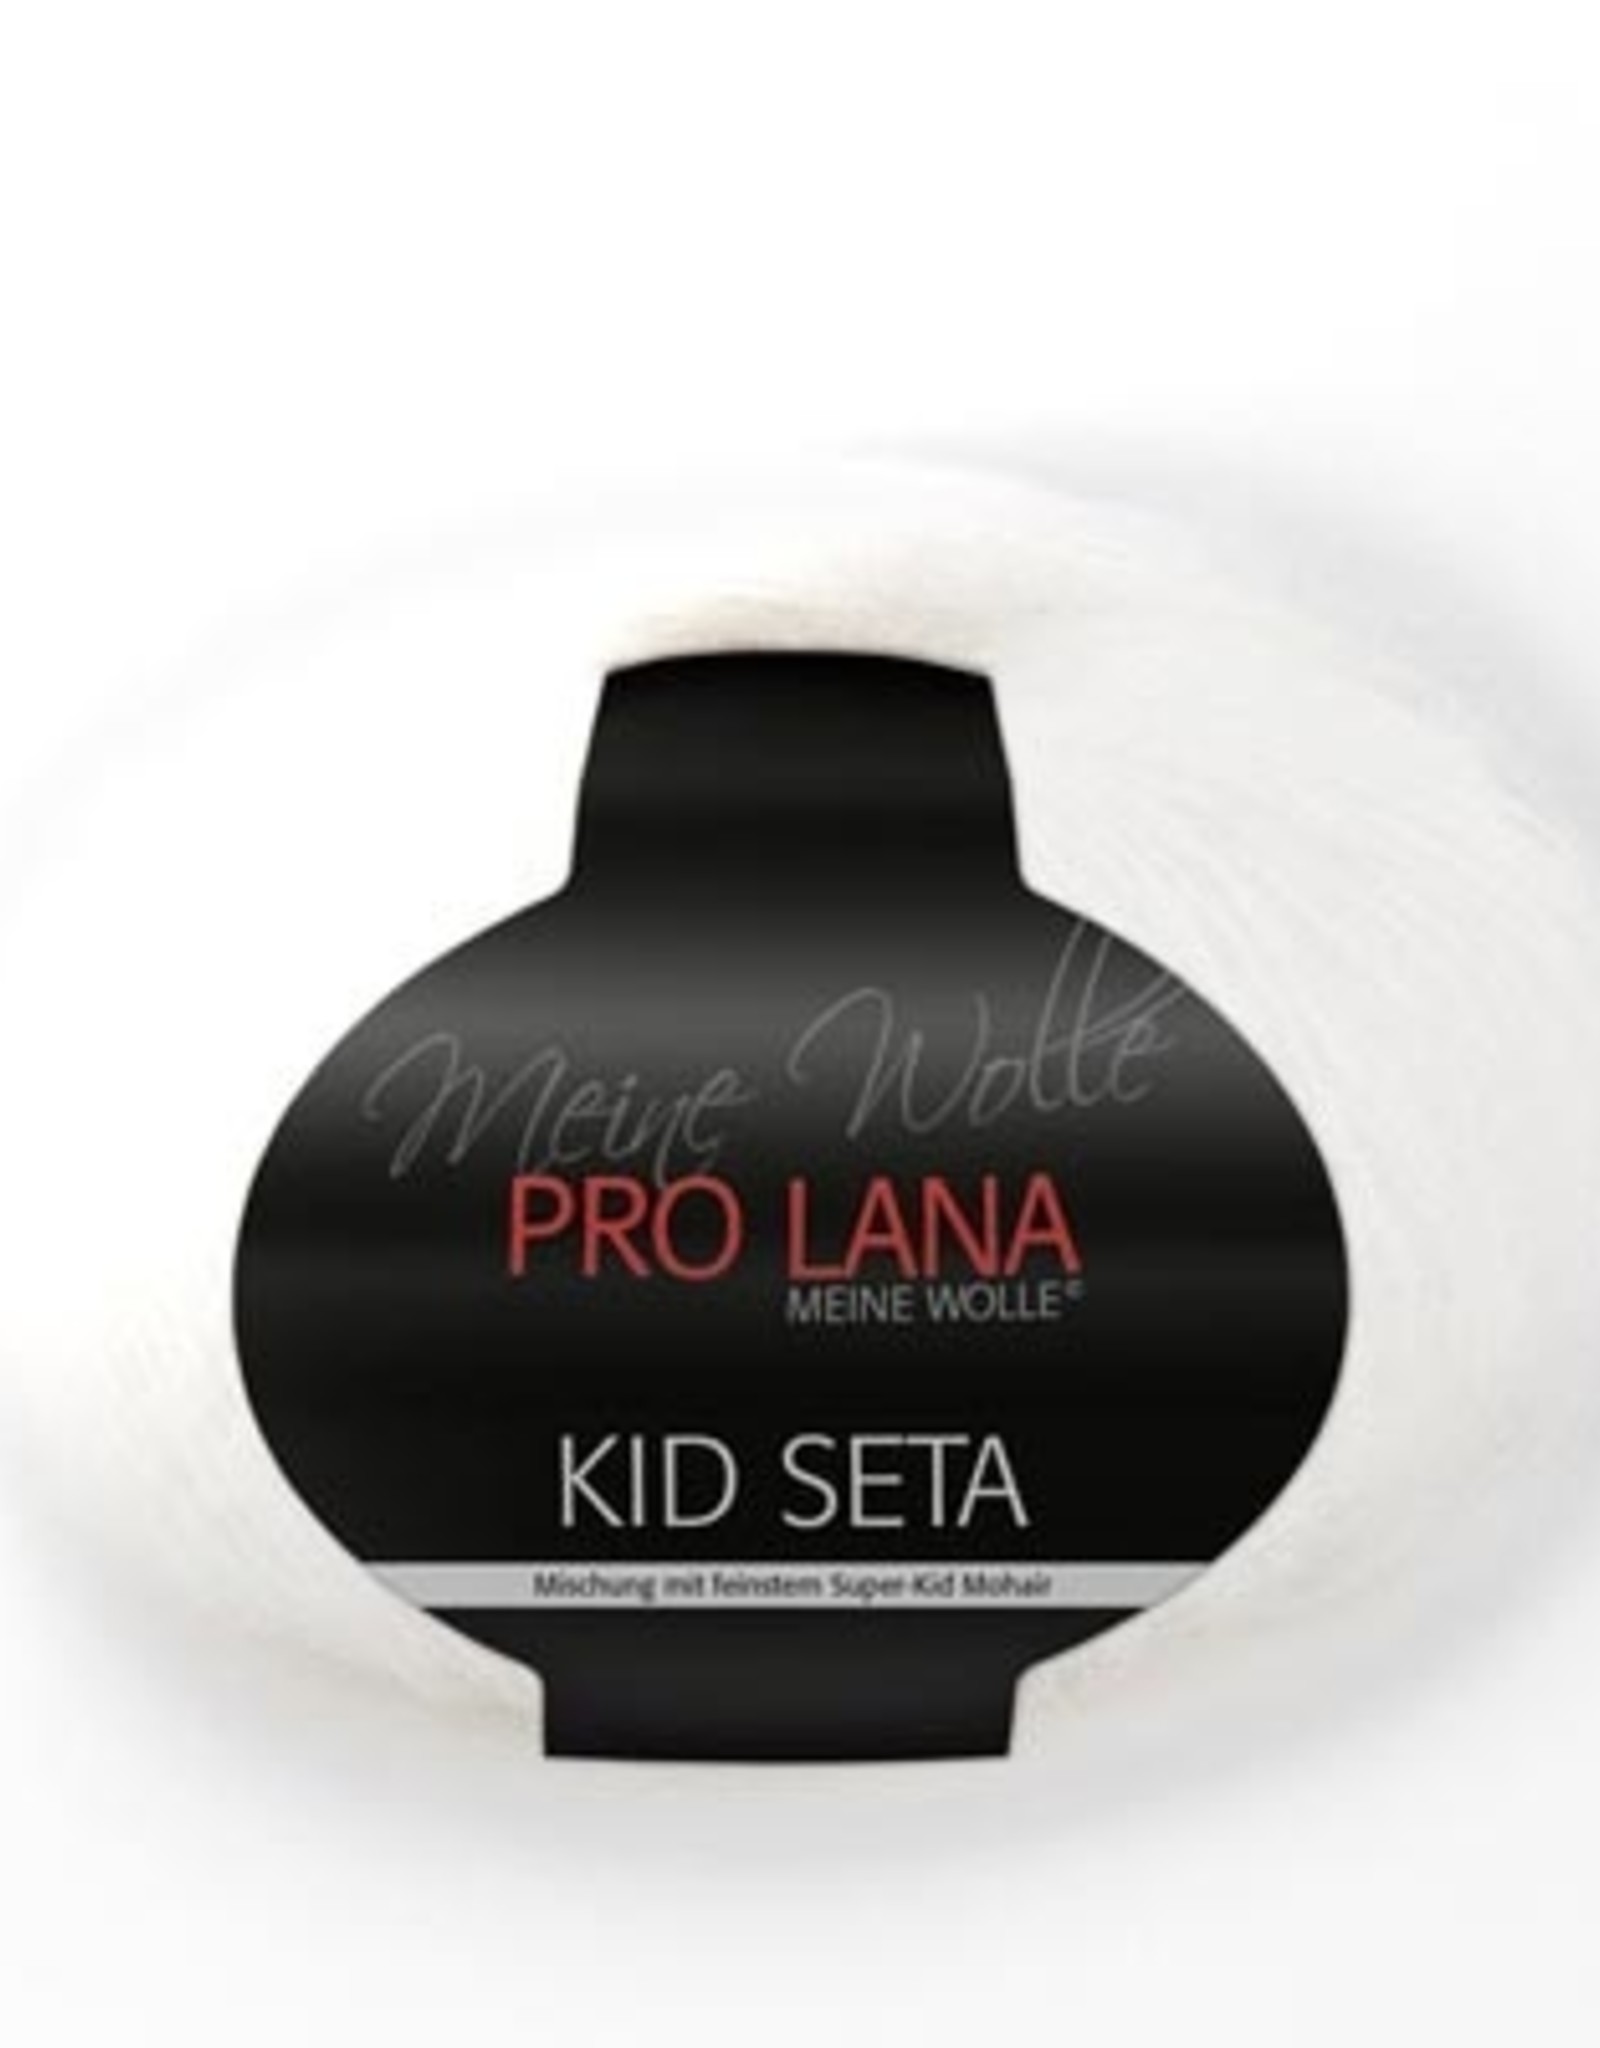 Pro Lana Pro Lana Kid Seta